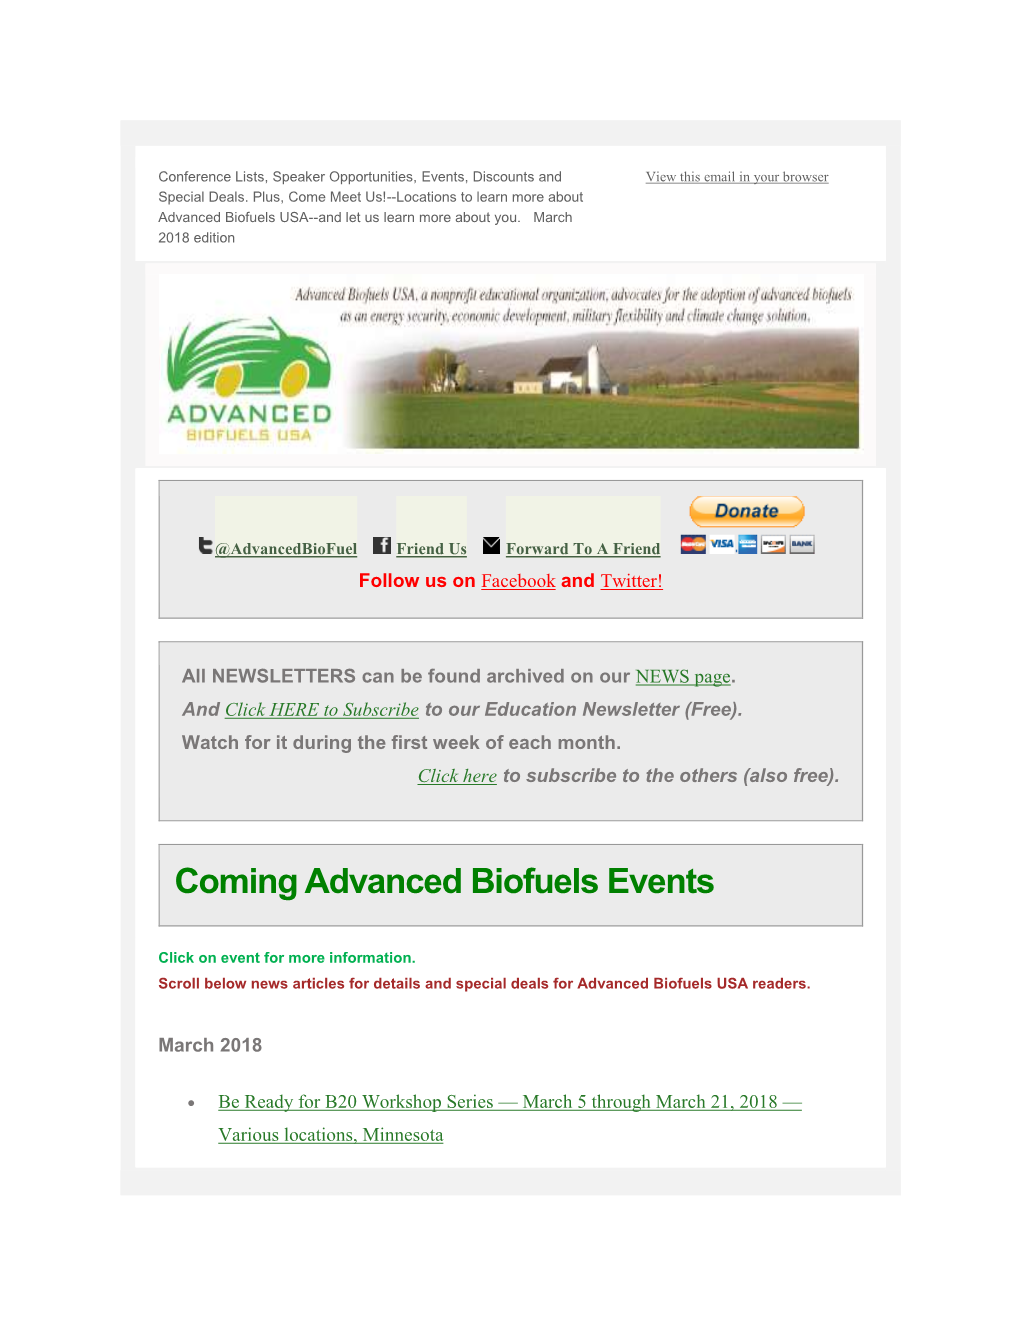 Coming Advanced Biofuels Events